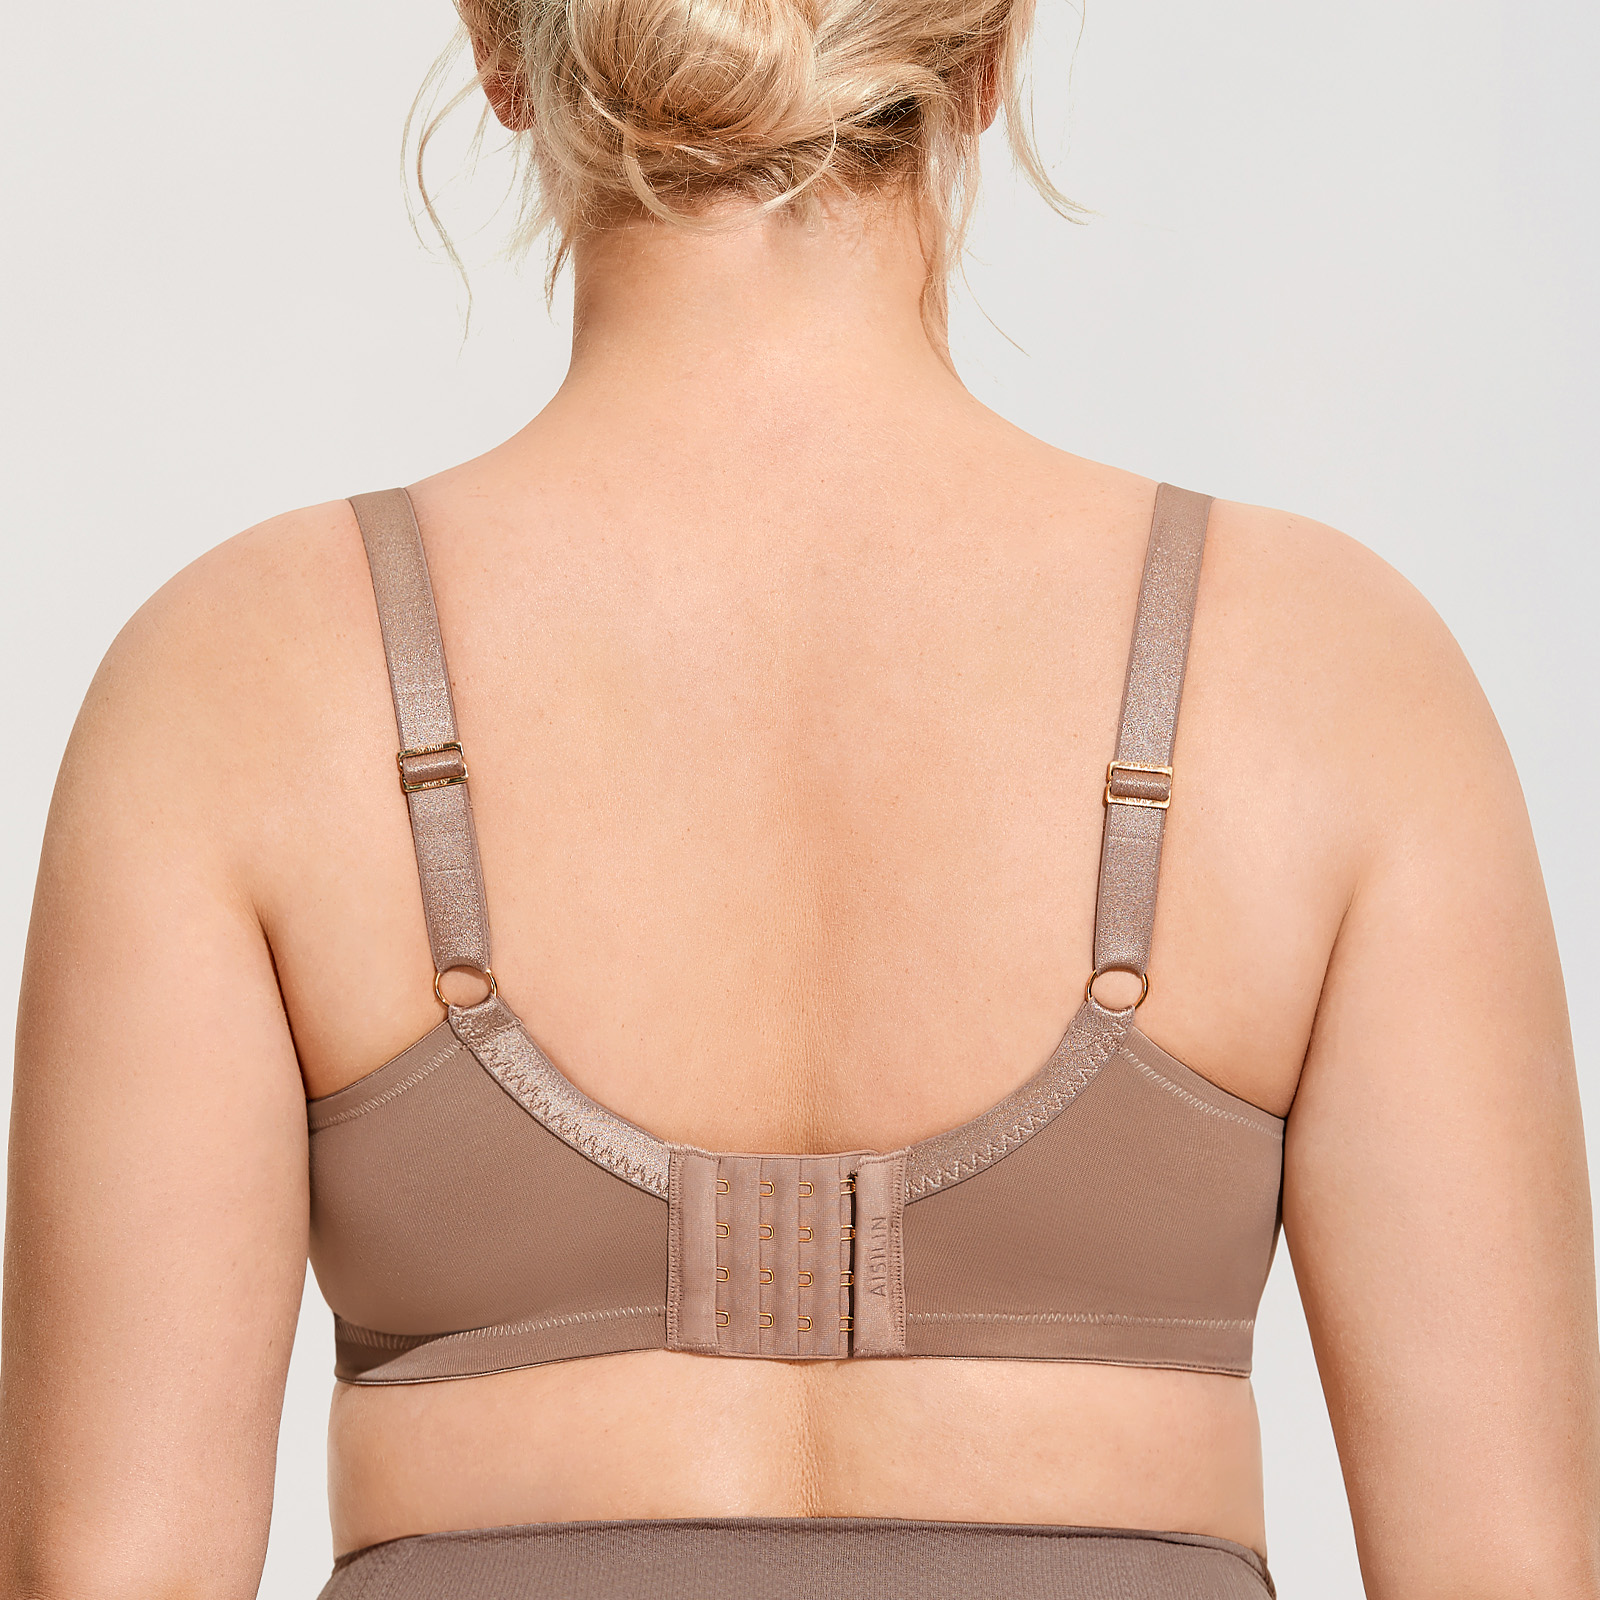 Aisilin Womens Minimizer Lace Bra Plus Size Unlined Underwire Full Coverage Ebay